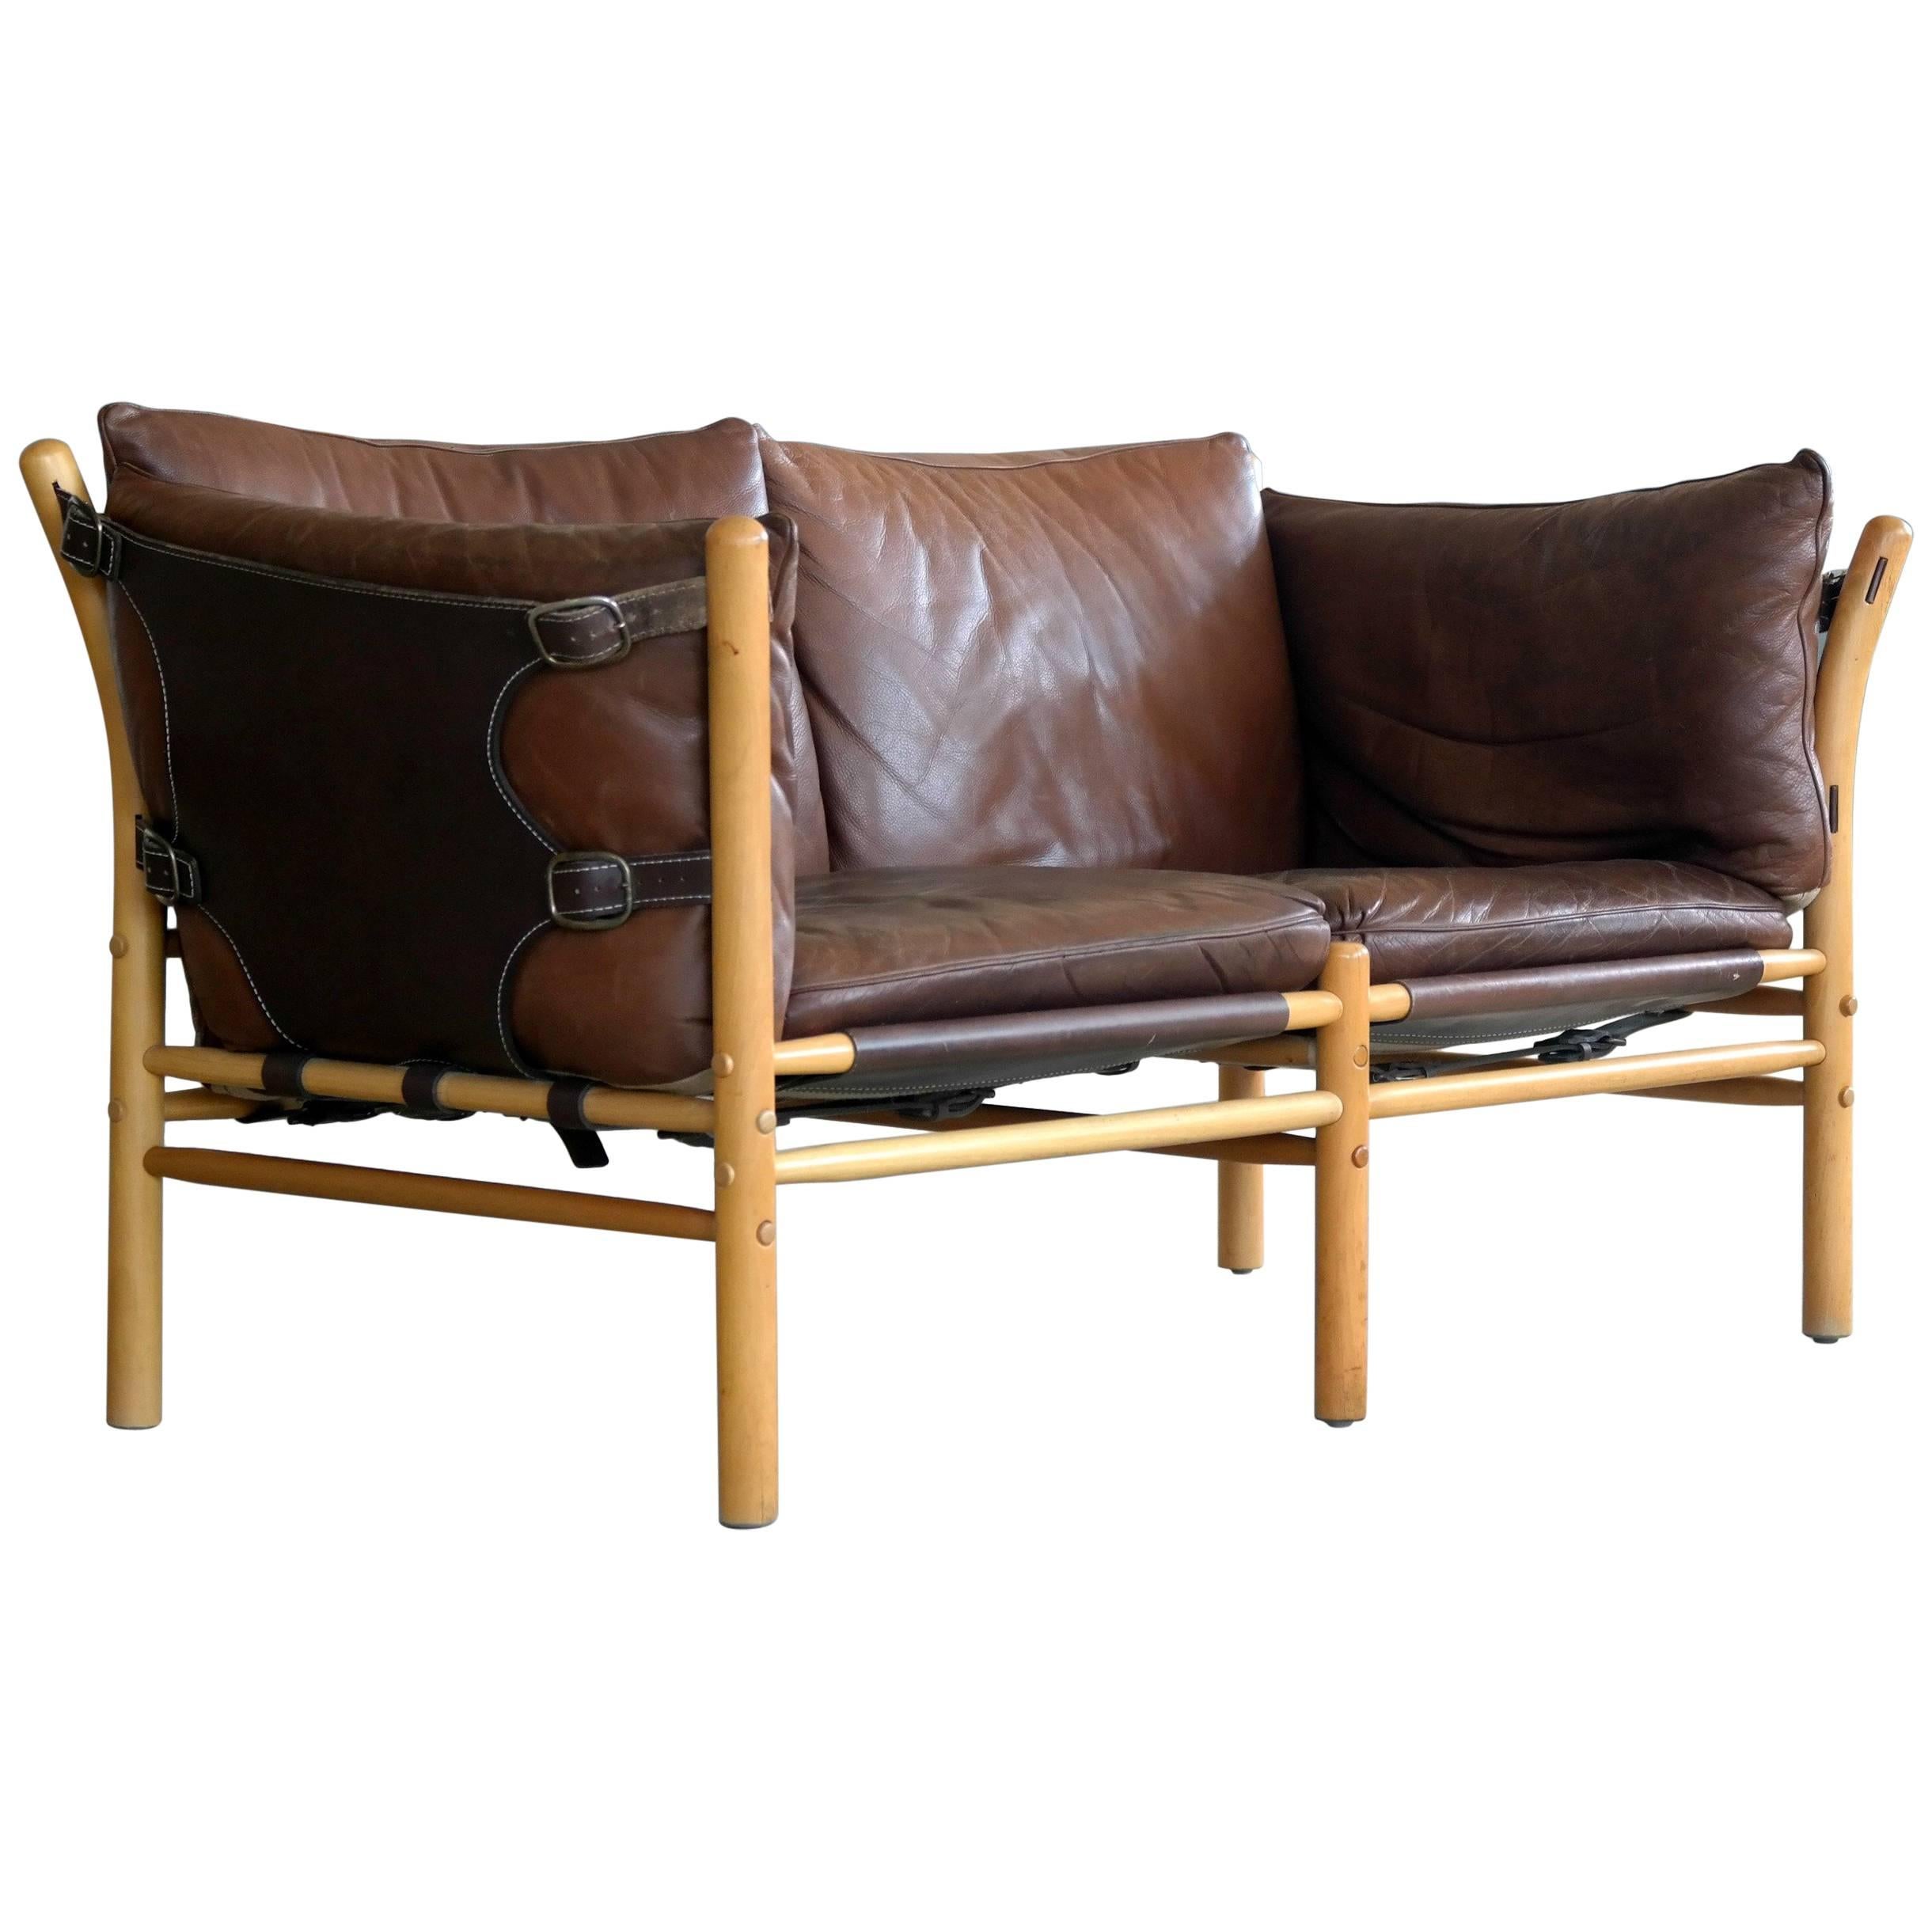 Arne Norell Safari Sofa Model Ilona in Cognac Leather for Norell Ab, Sweden